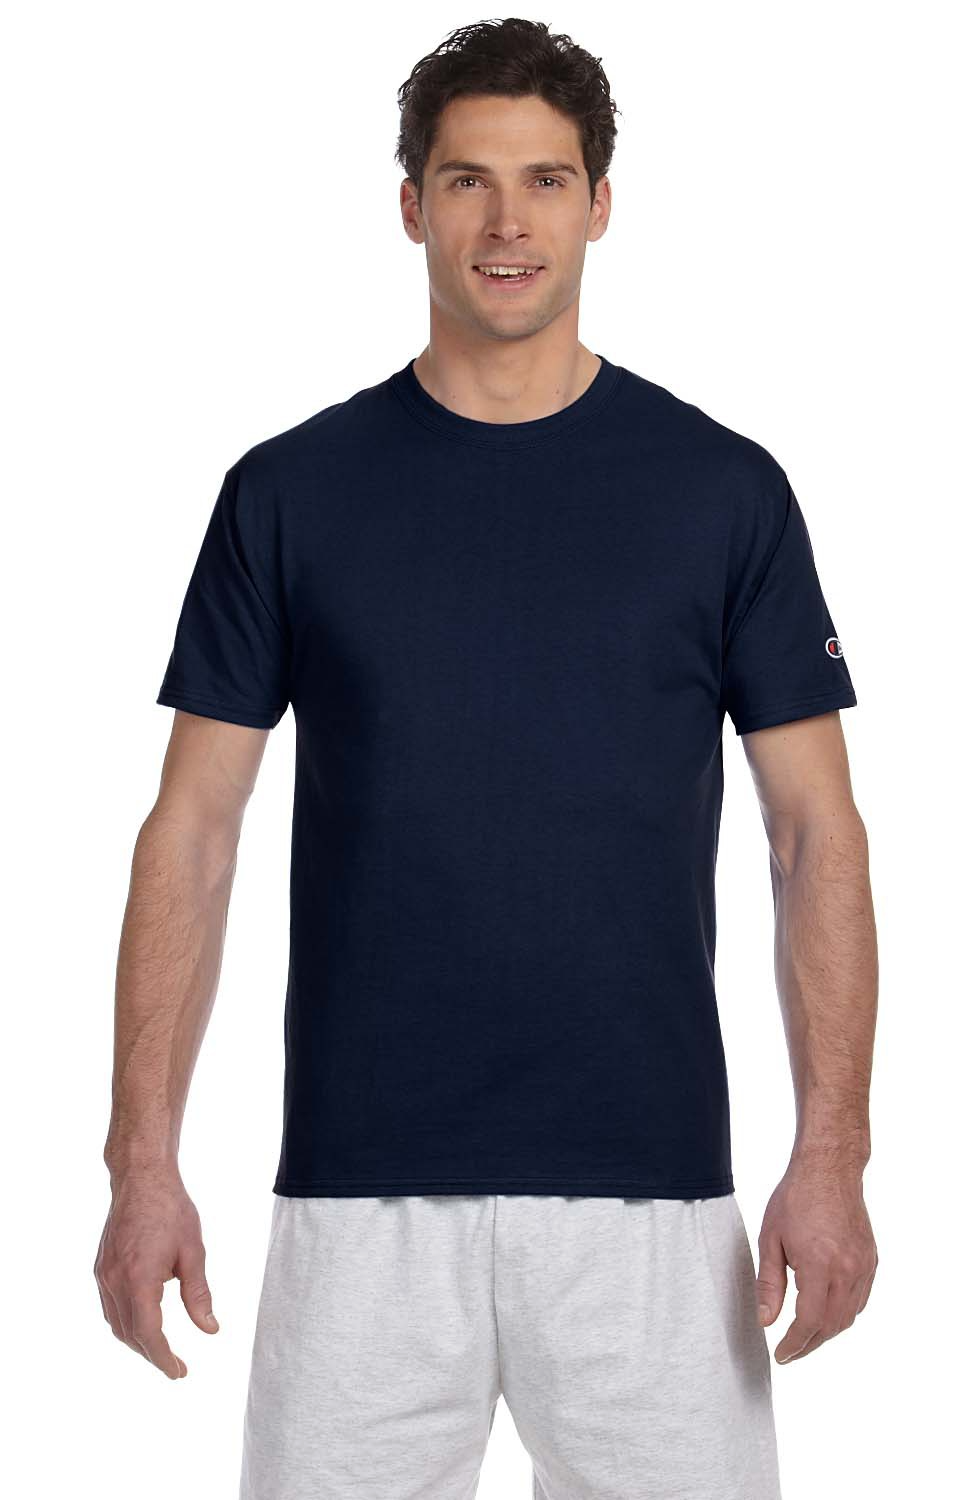 navy blue champion t shirt